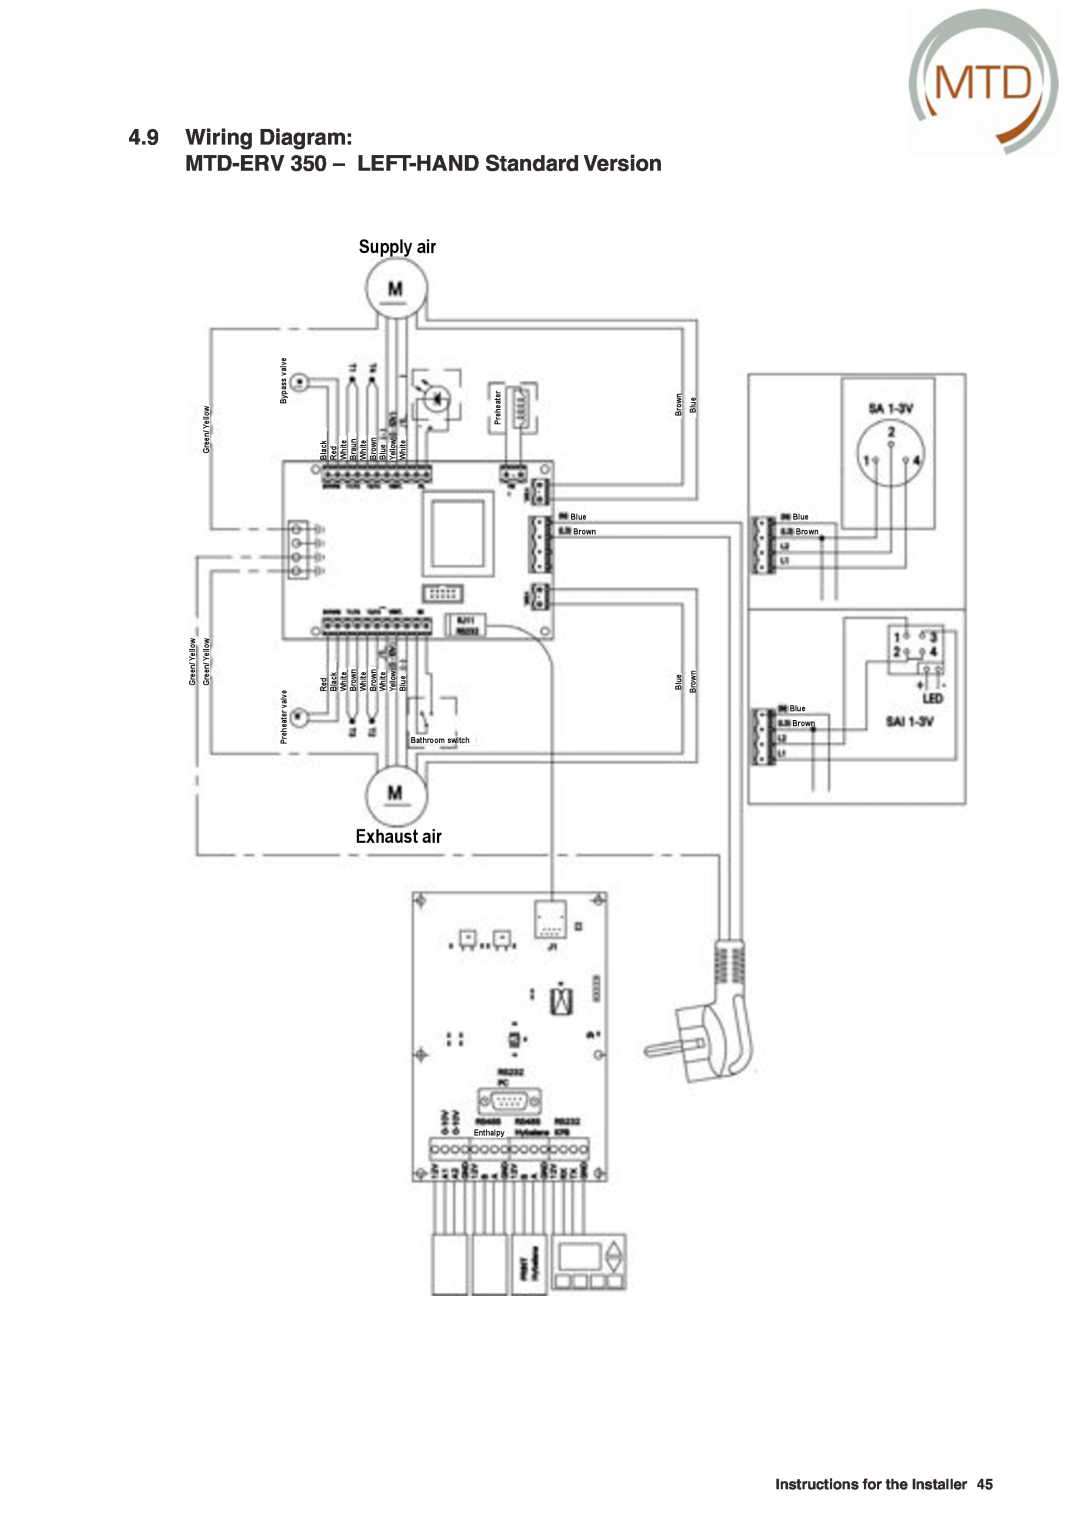 MTD Wiring Diagram MTD-ERV 350 - LEFT-HAND Standard Version, Supply air, Exhaust air, Instructions for the Installer 